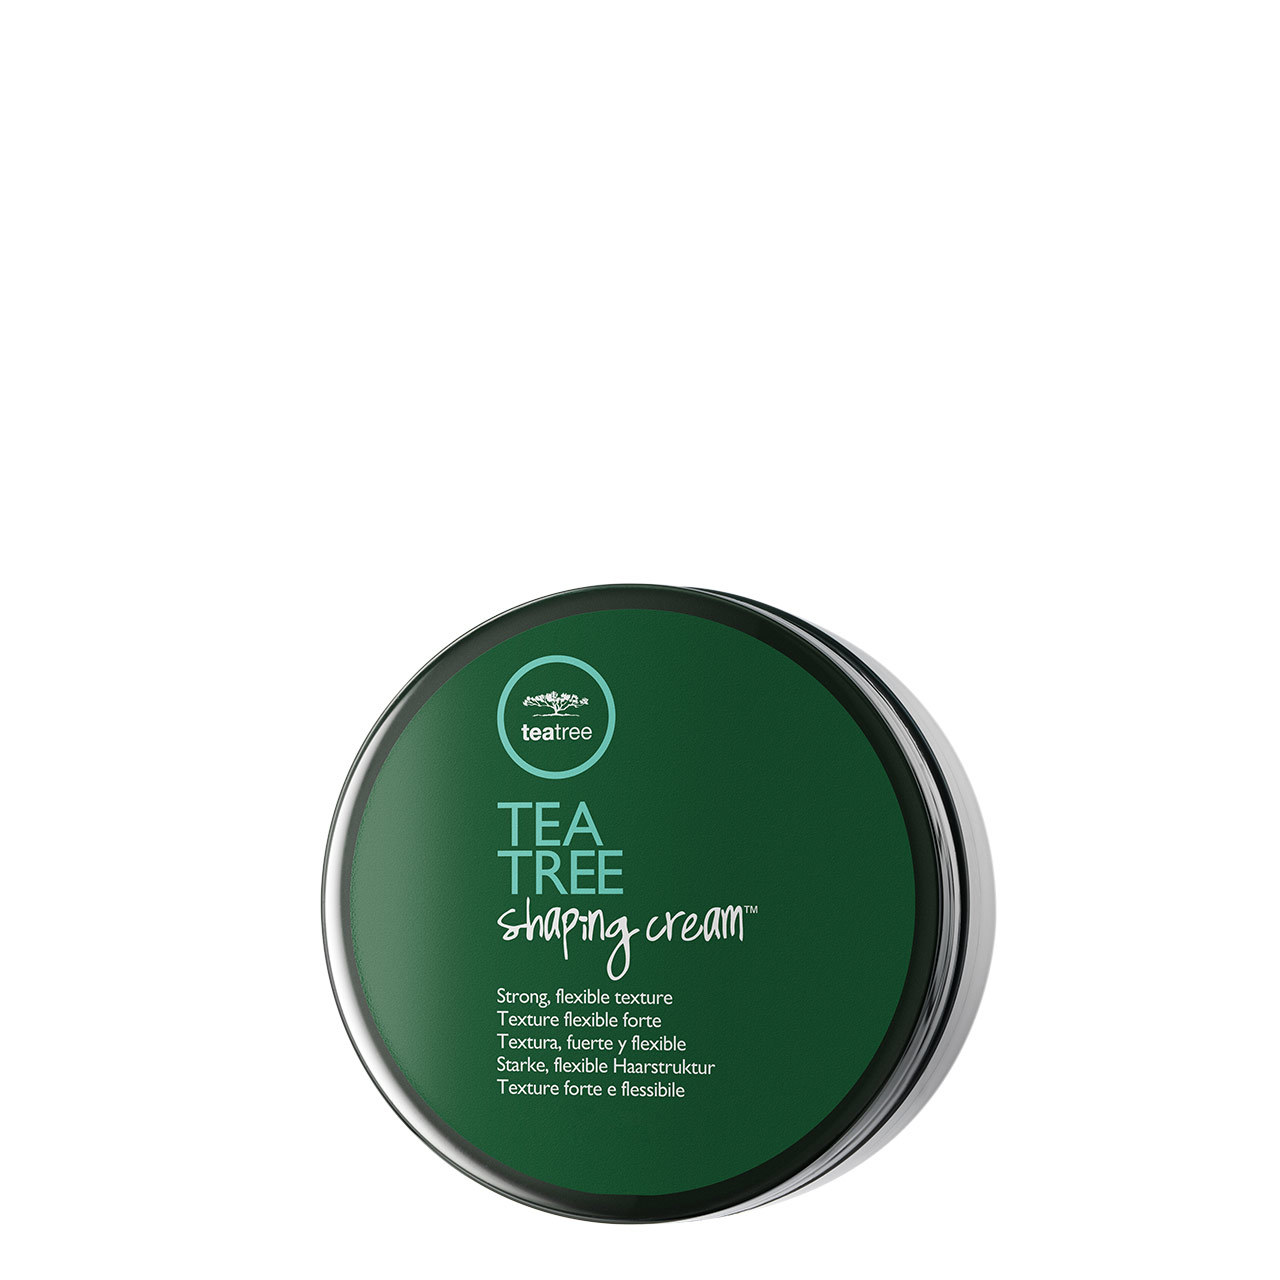 Tea Tree Shaping Cream by Paul Mitchell